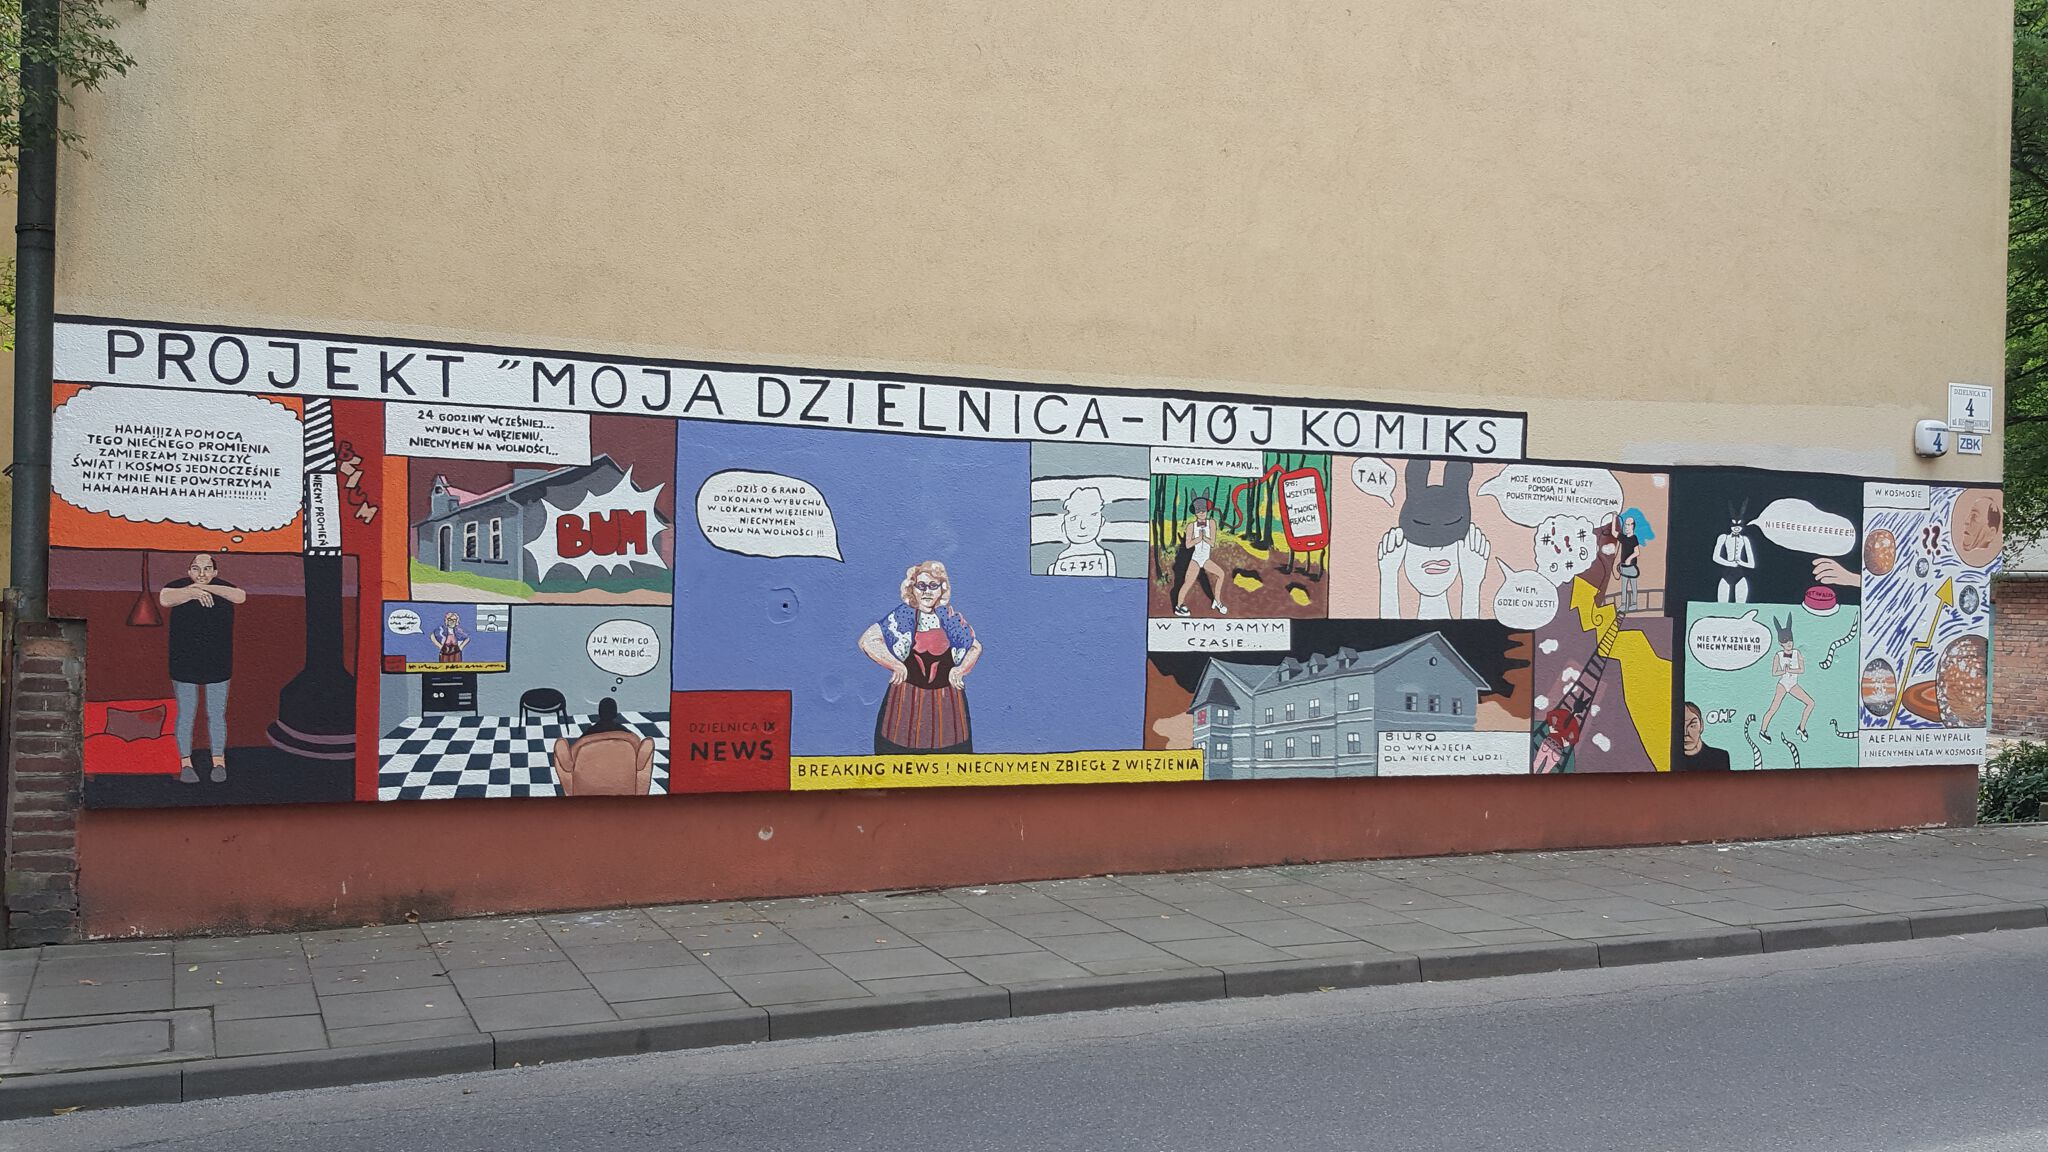 Joanna Róg-Ociepka&mdash;Moja dzielnica - mój komiks (My neighborhood - my comics)